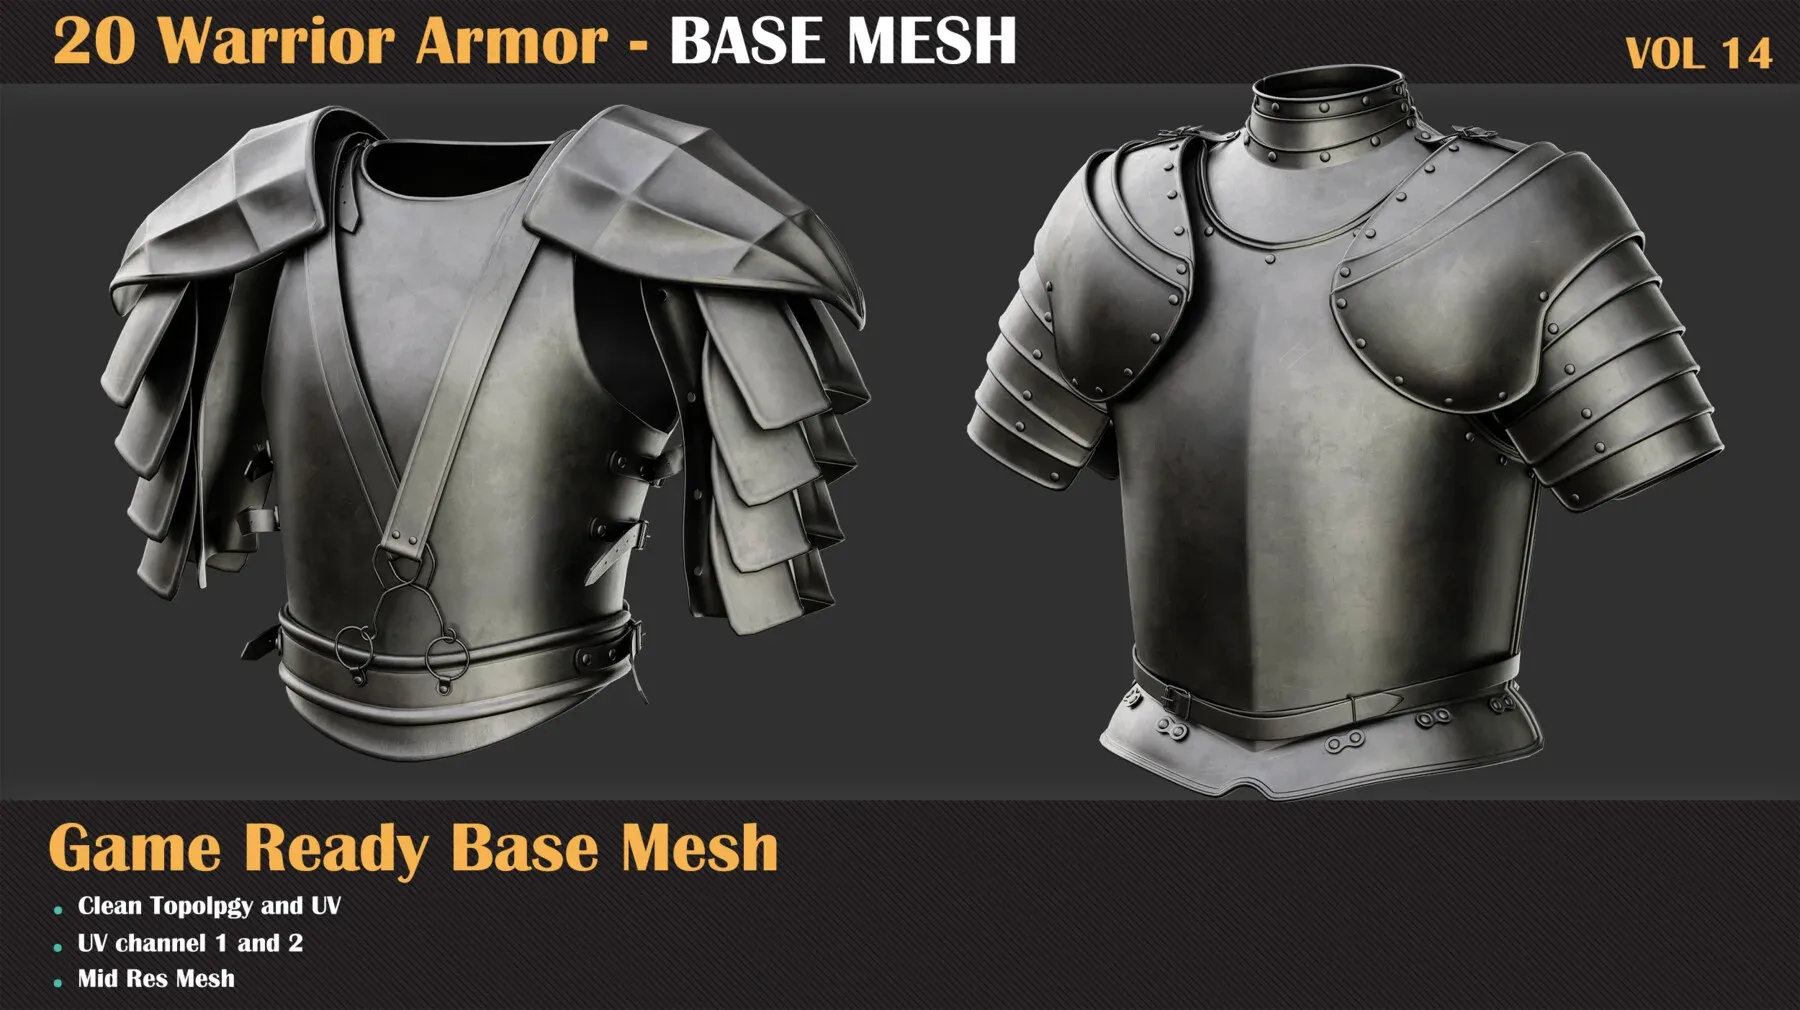 20 Warrior Armor BASE MESH - VOL 14